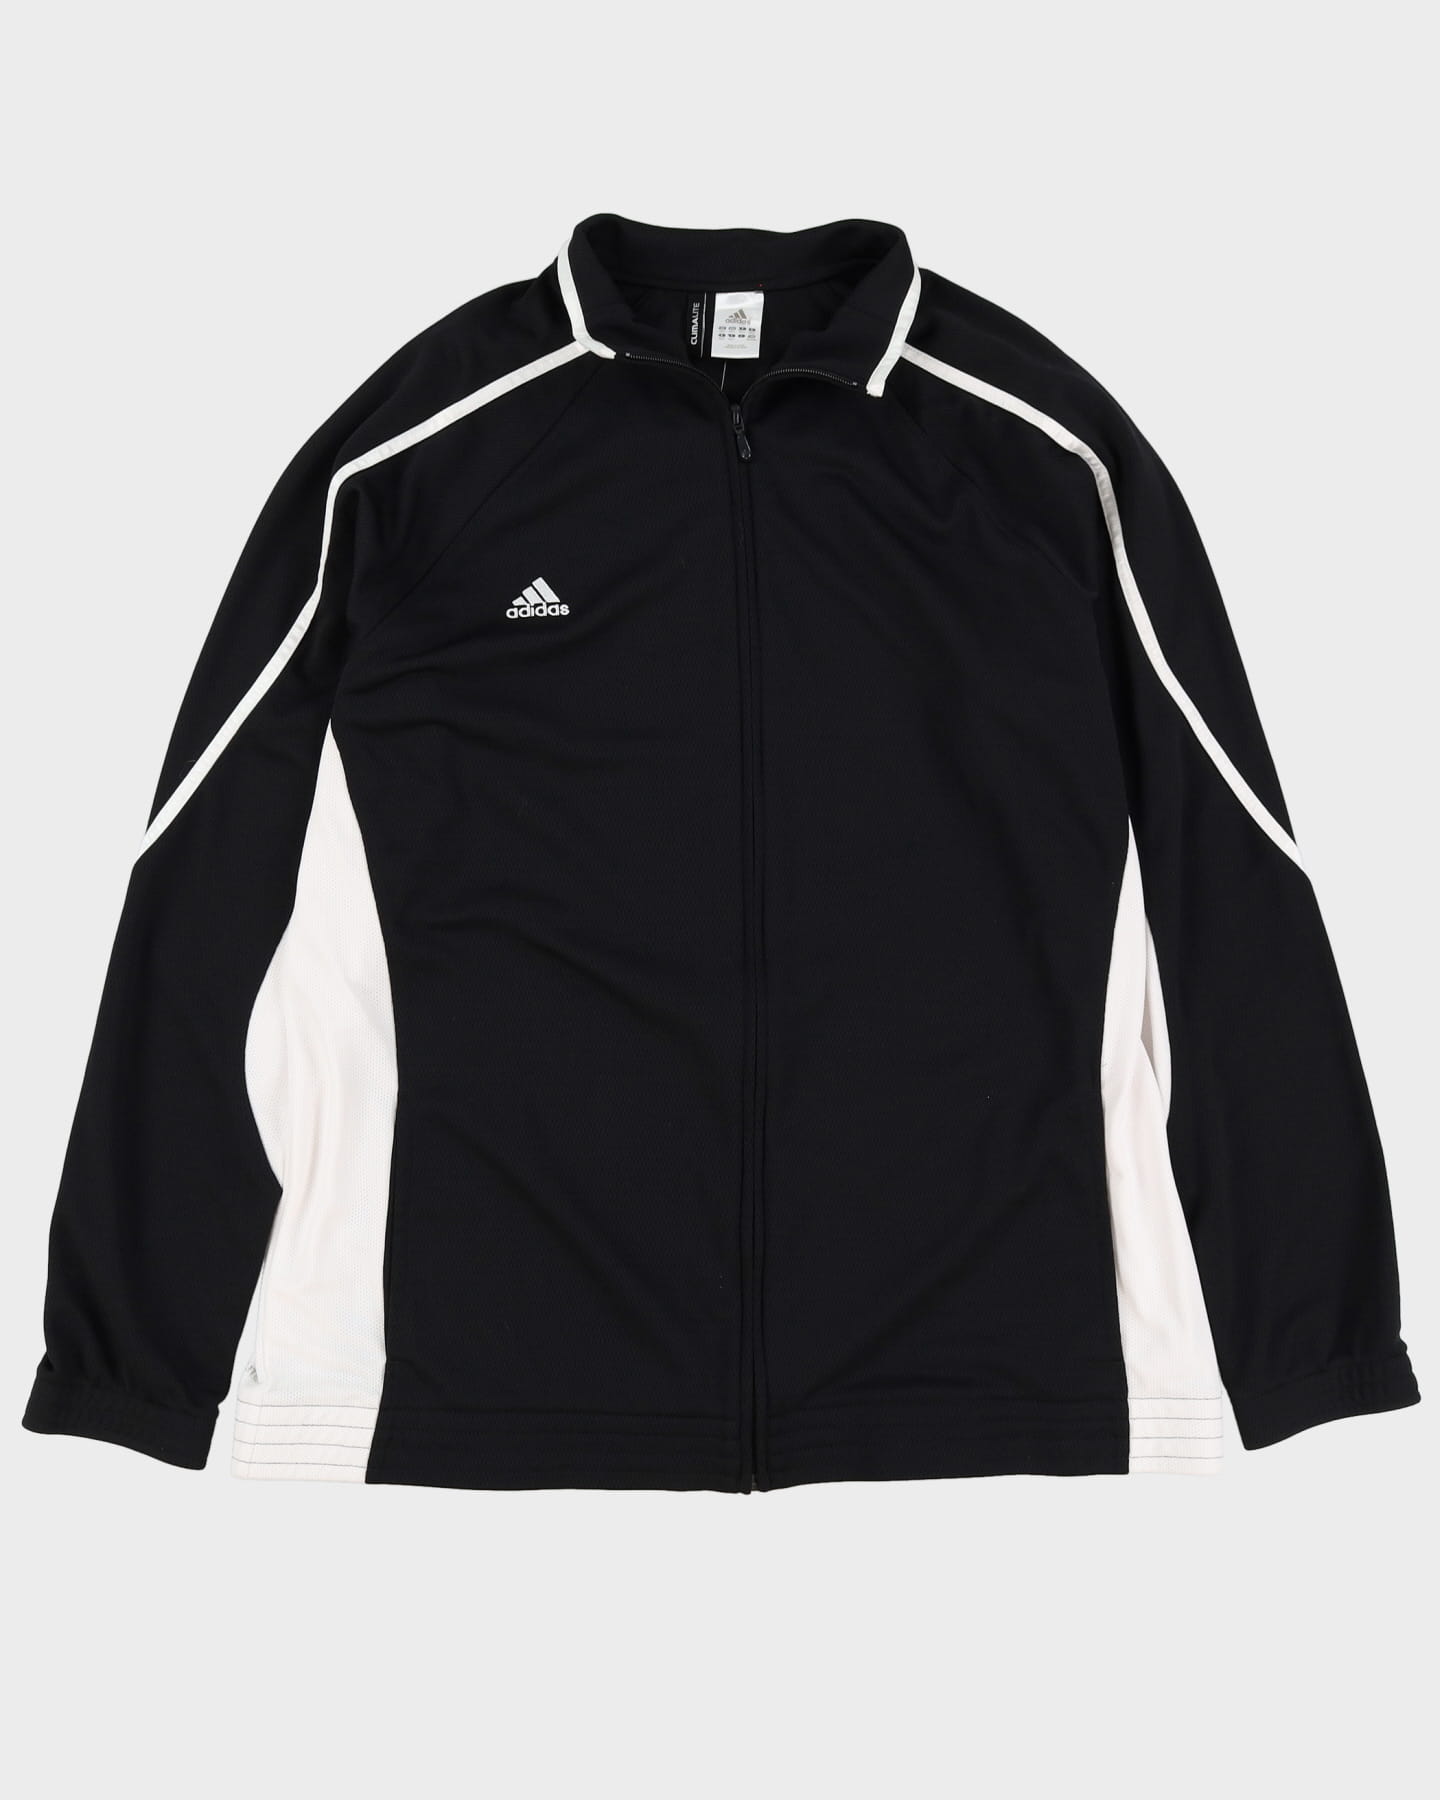 Adidas Black / White Track Jacket - XXL